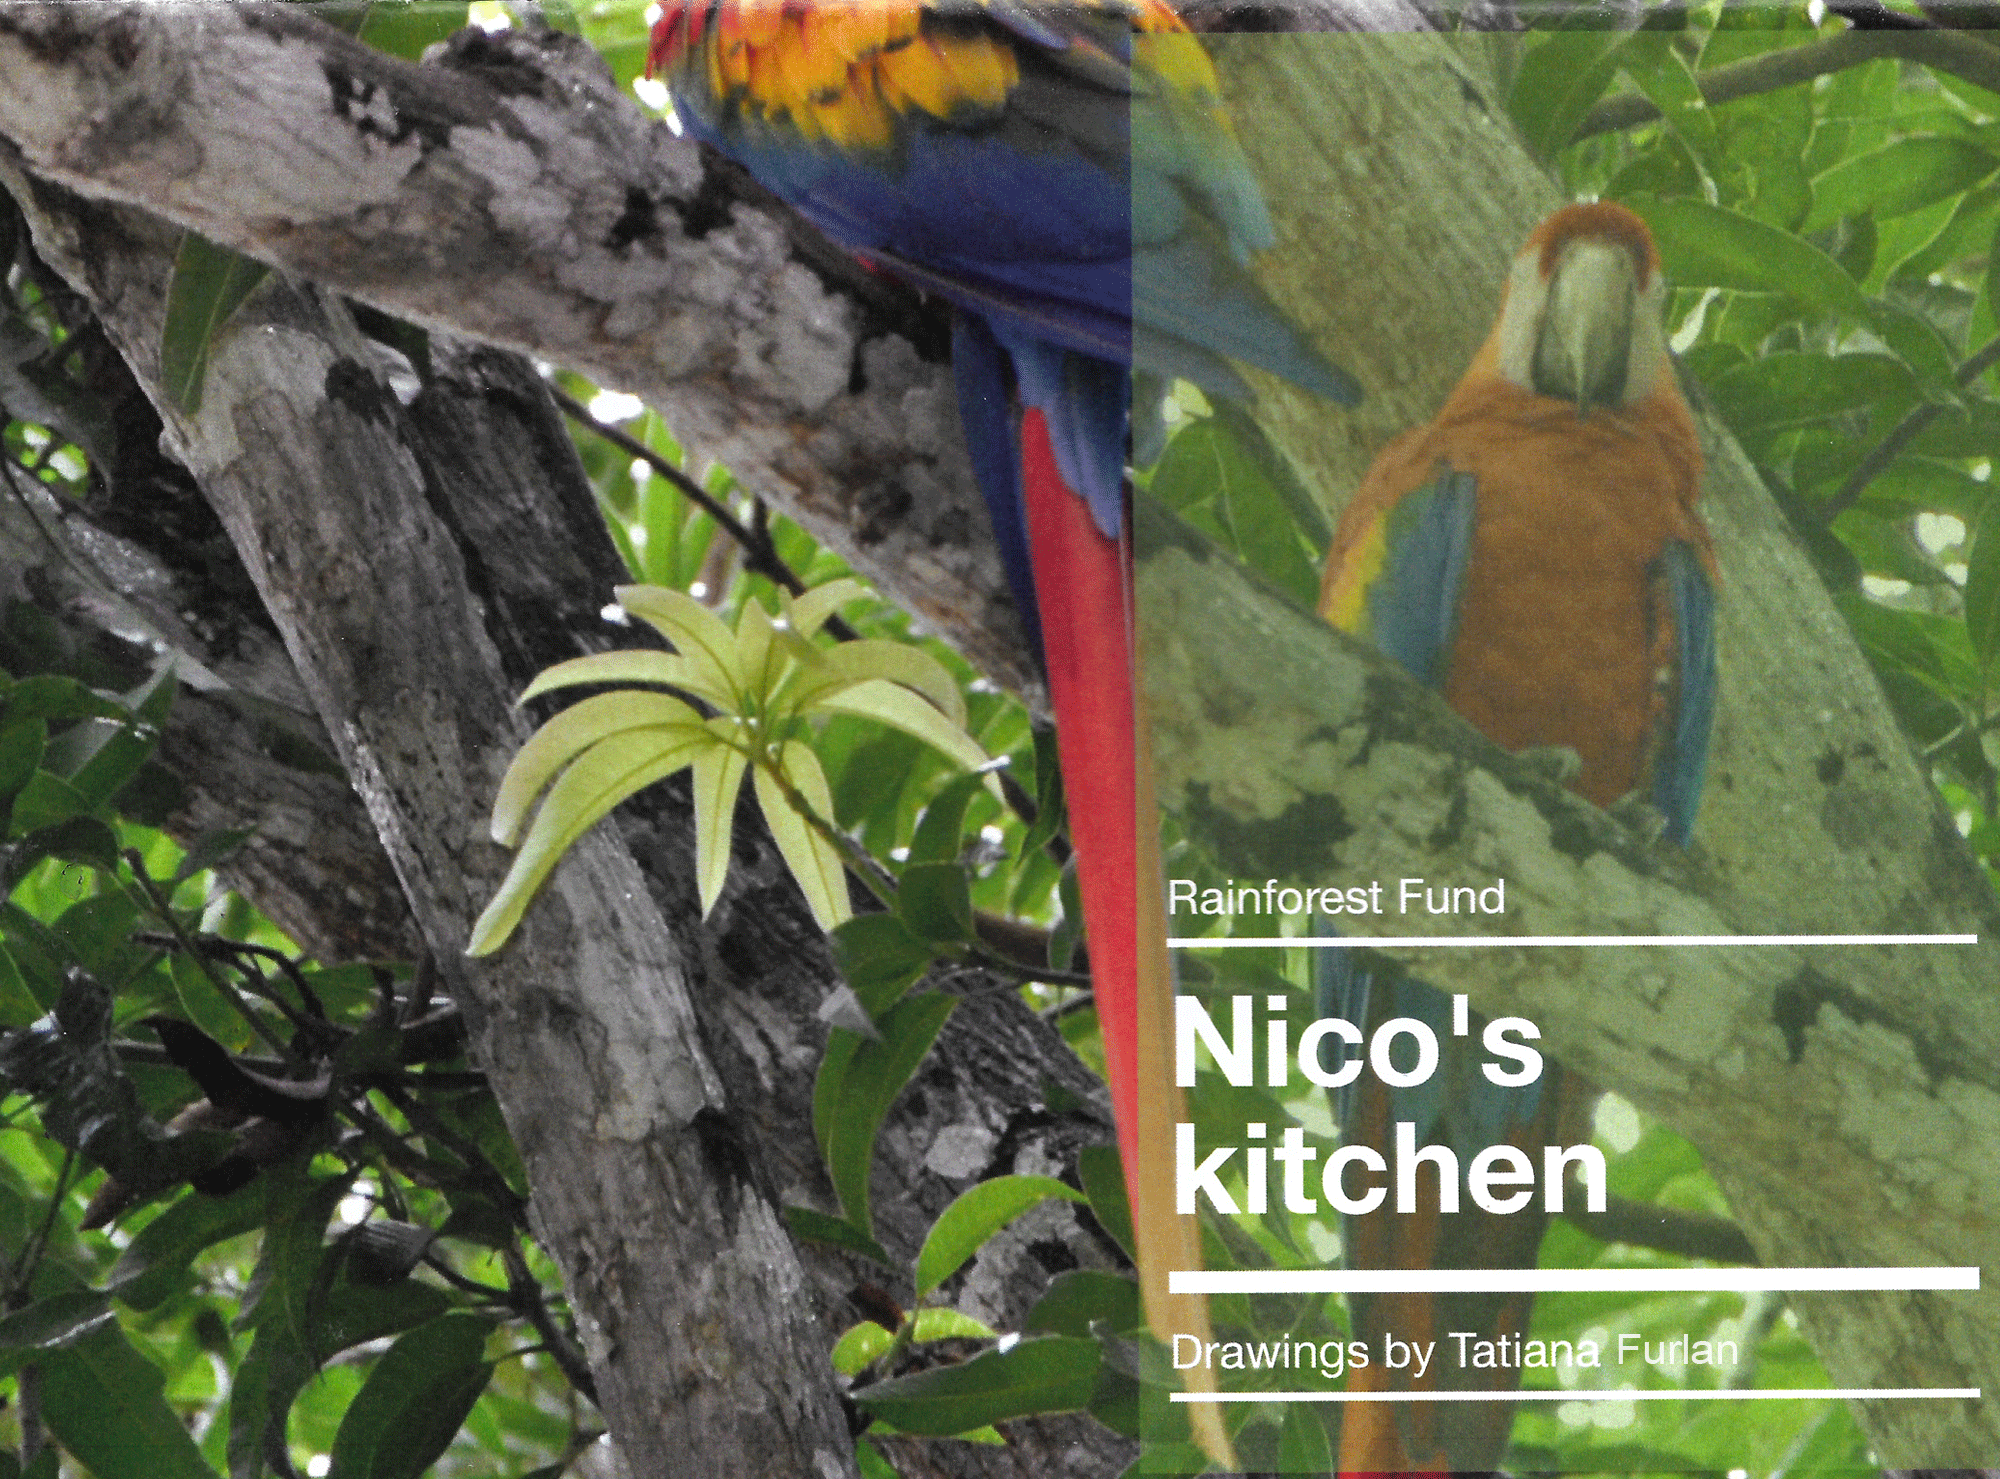 Nicos_Kitchencover-book